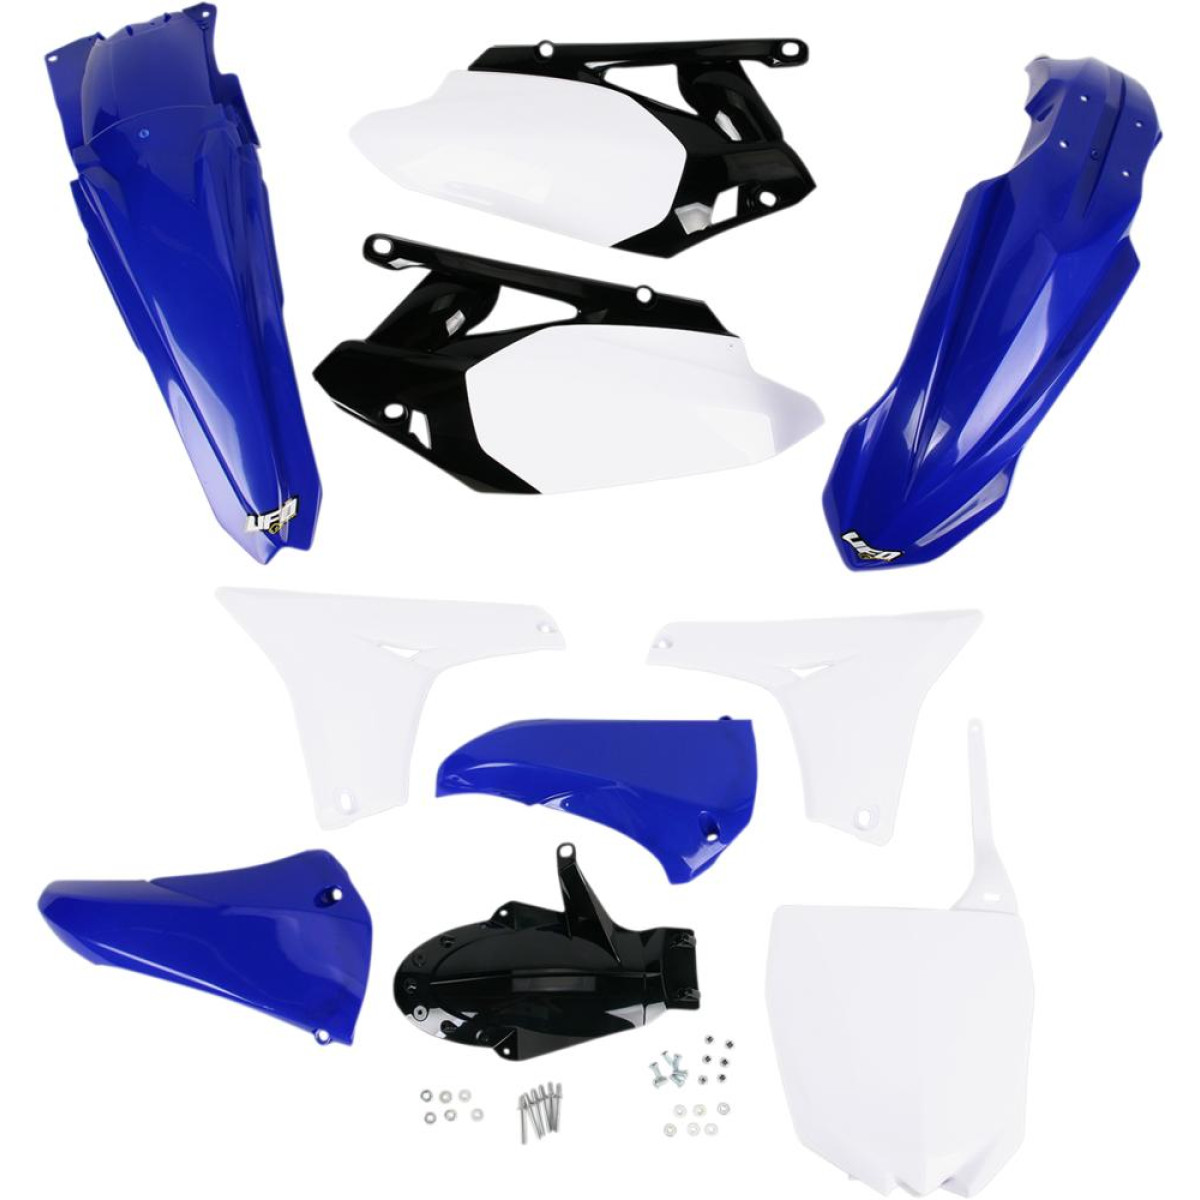 Kit Plastice Yamaha Yzf 450 11, Albastru/alb, Culoare Oem